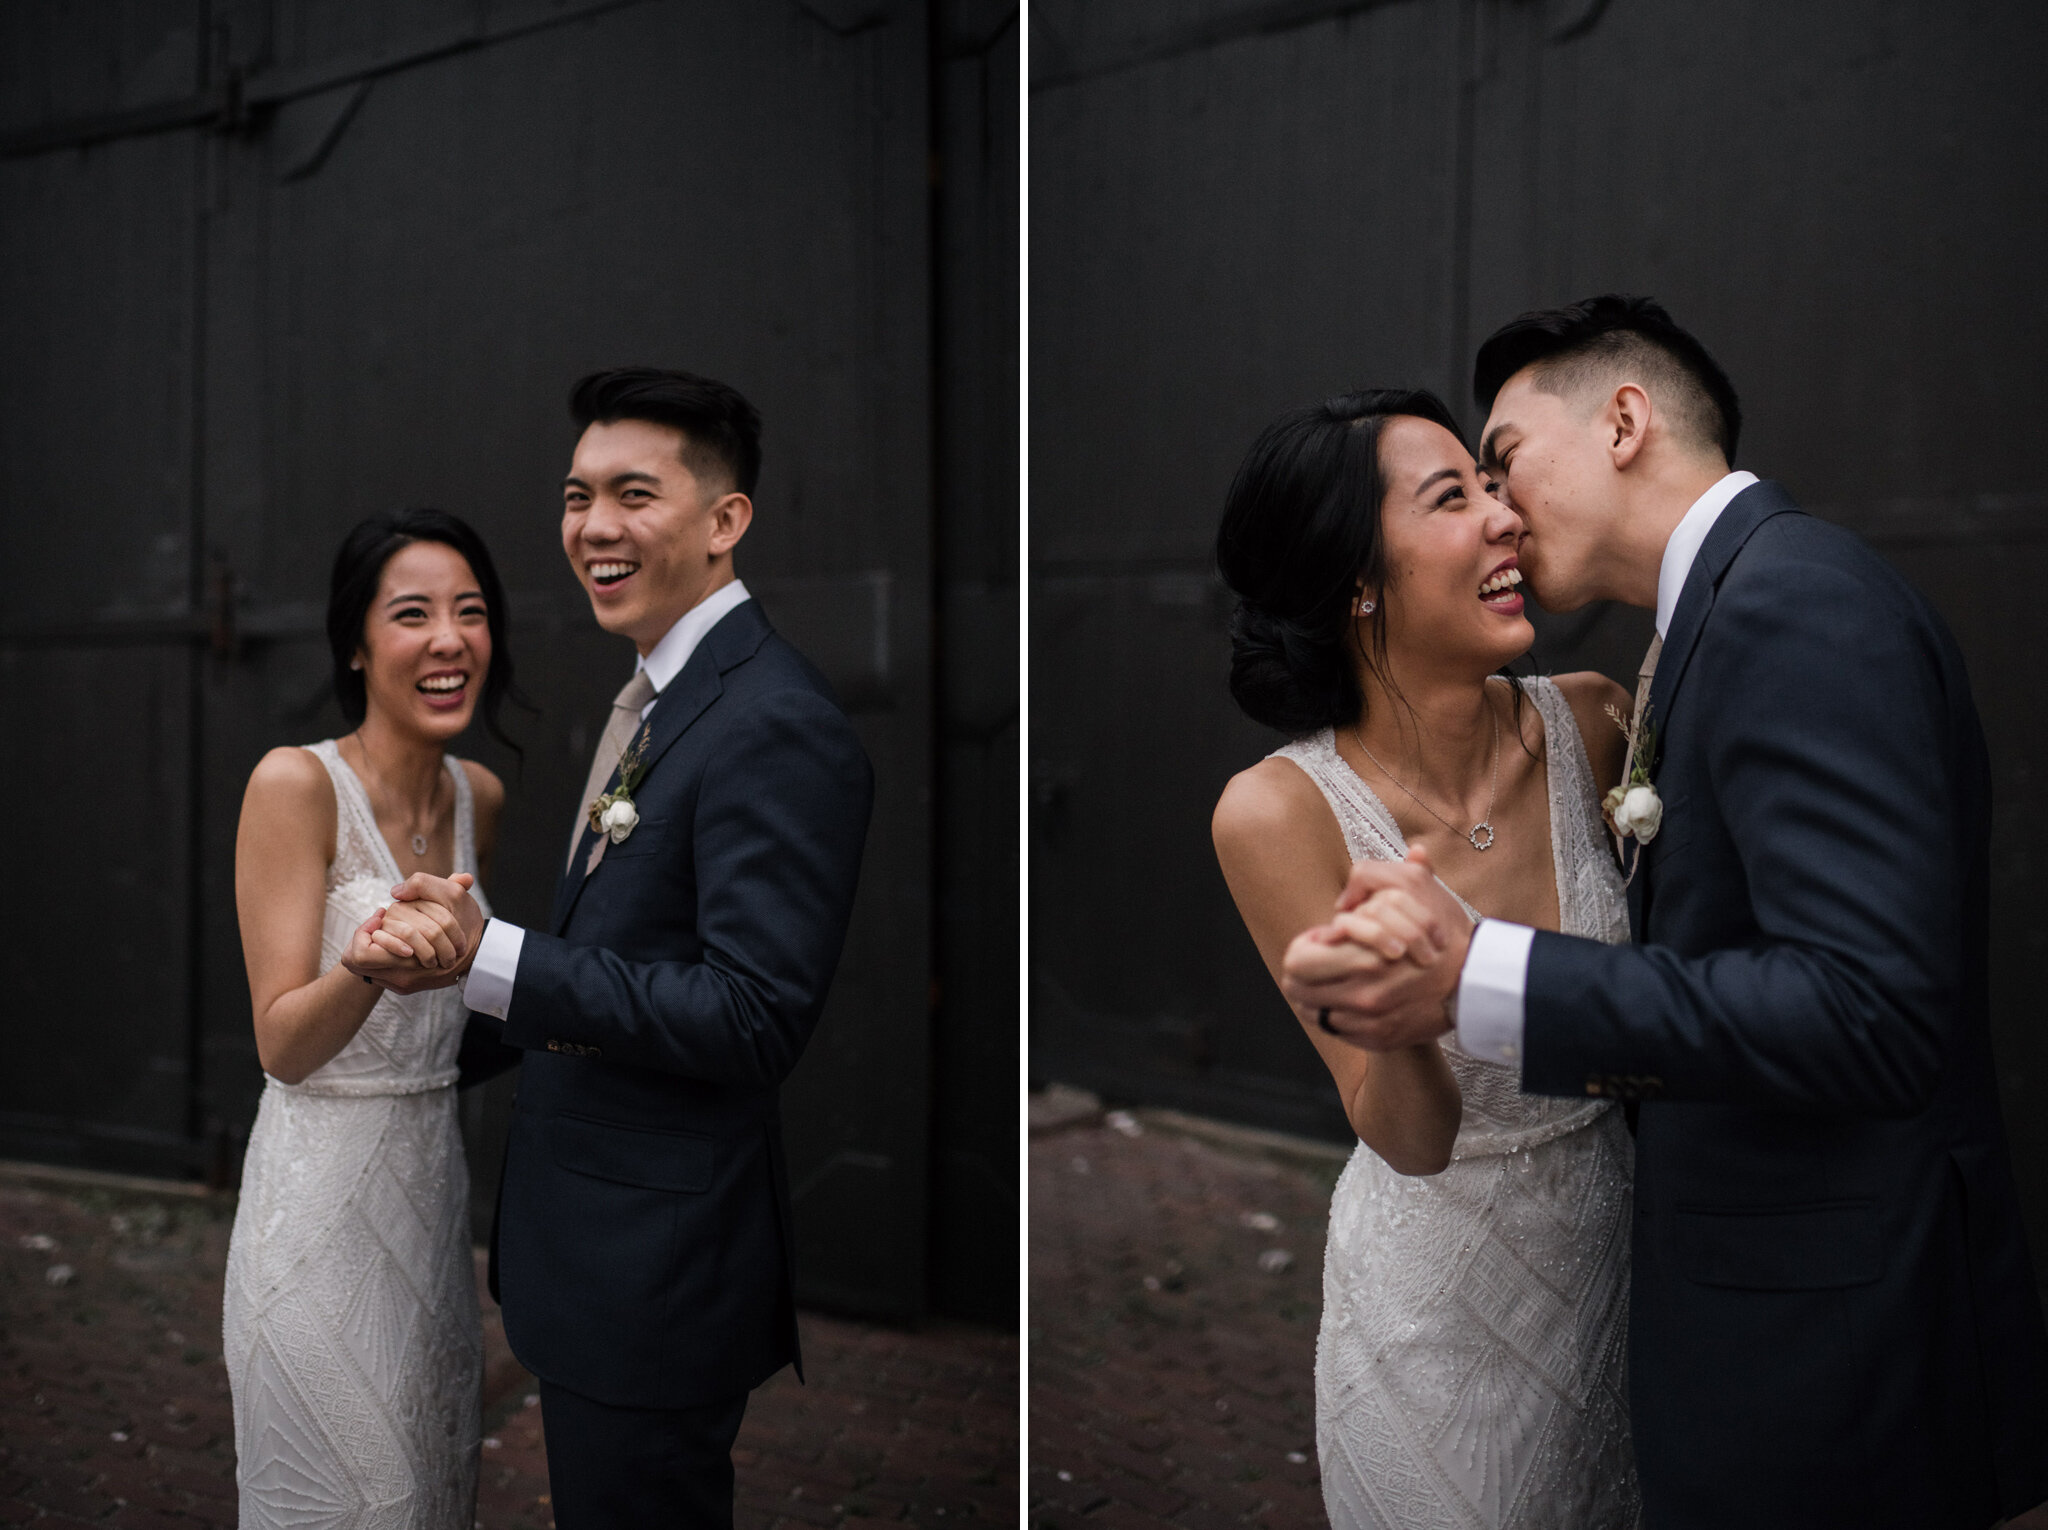 145-bride-groom-wedding-couple-photos-steamwhistle-downtown-toronto-reception-string-lights.jpg